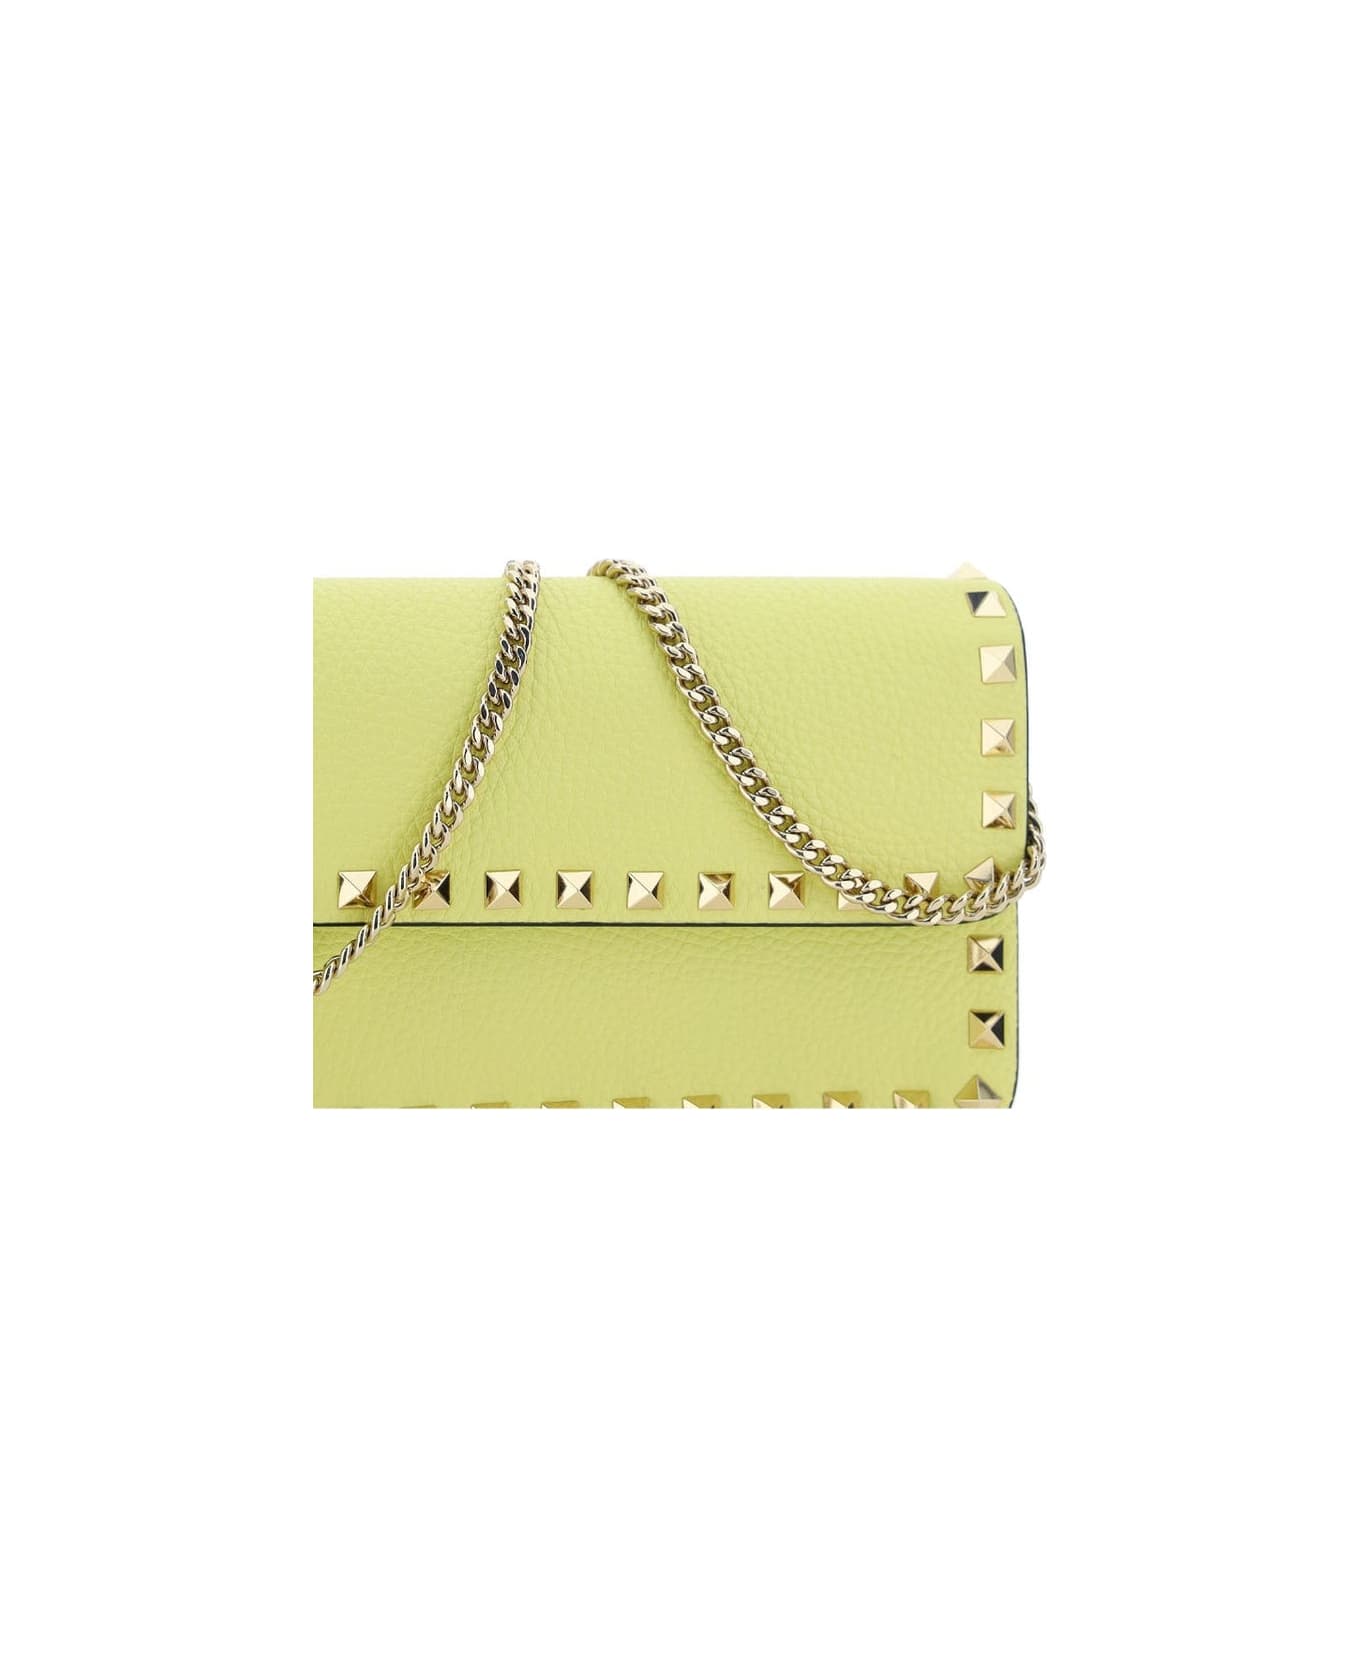 Valentino Garavani Garavani Leather Rockstud Handbag - Yellow クラッチバッグ